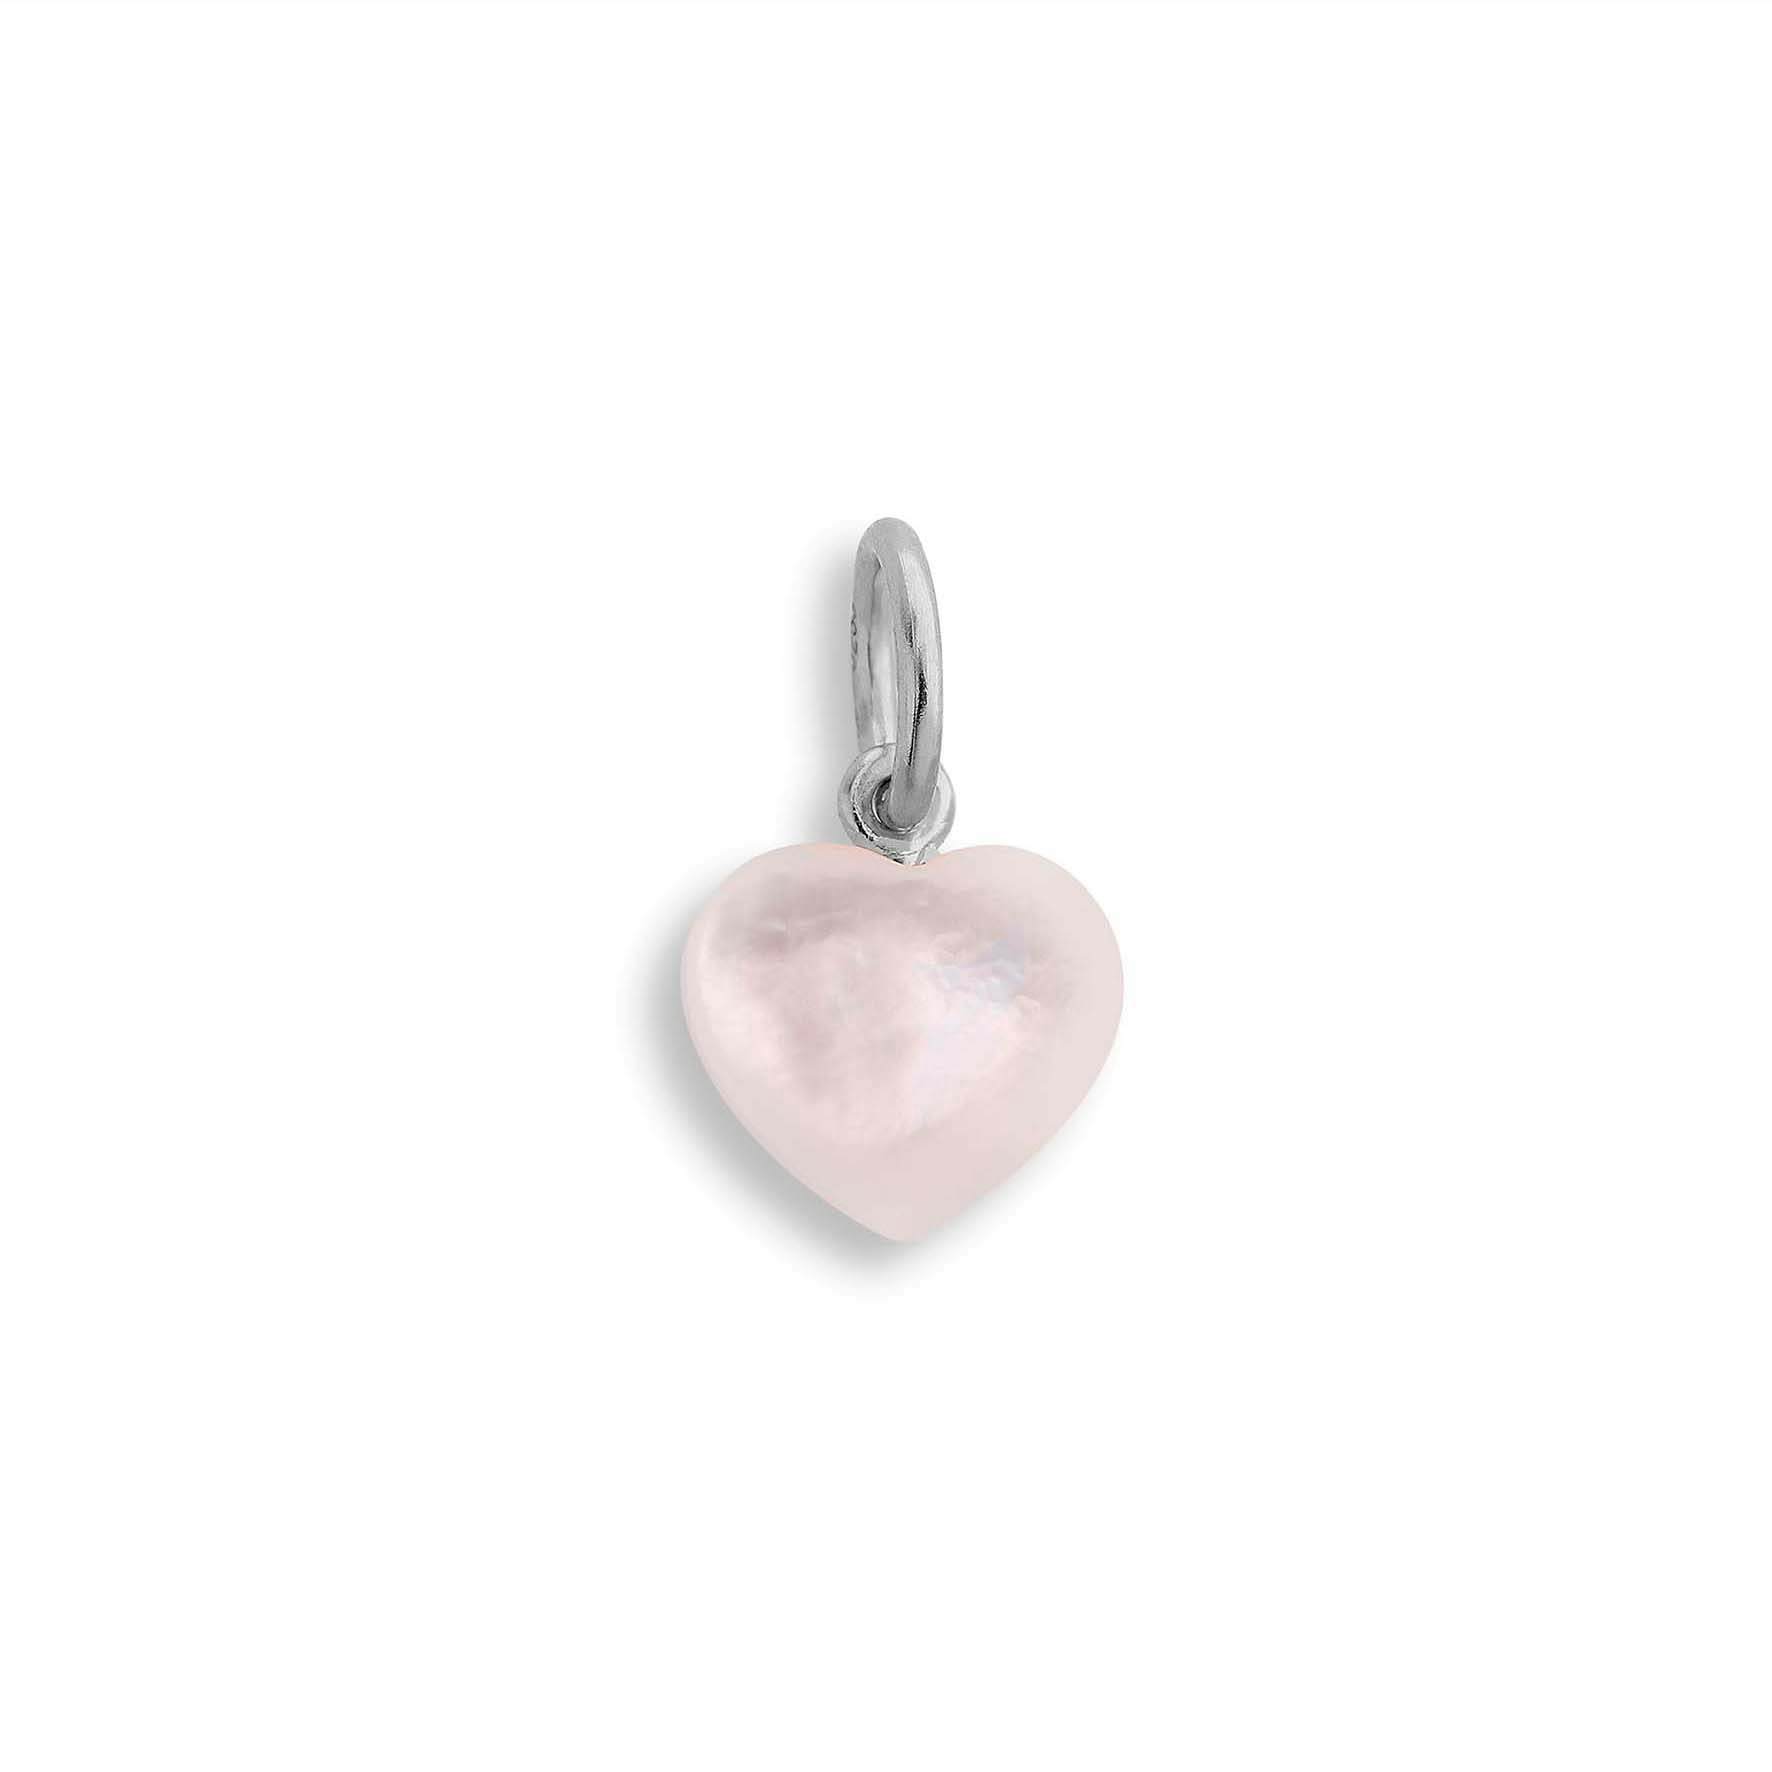 Small Souvenir Heart Silber Sterling 925 / 10